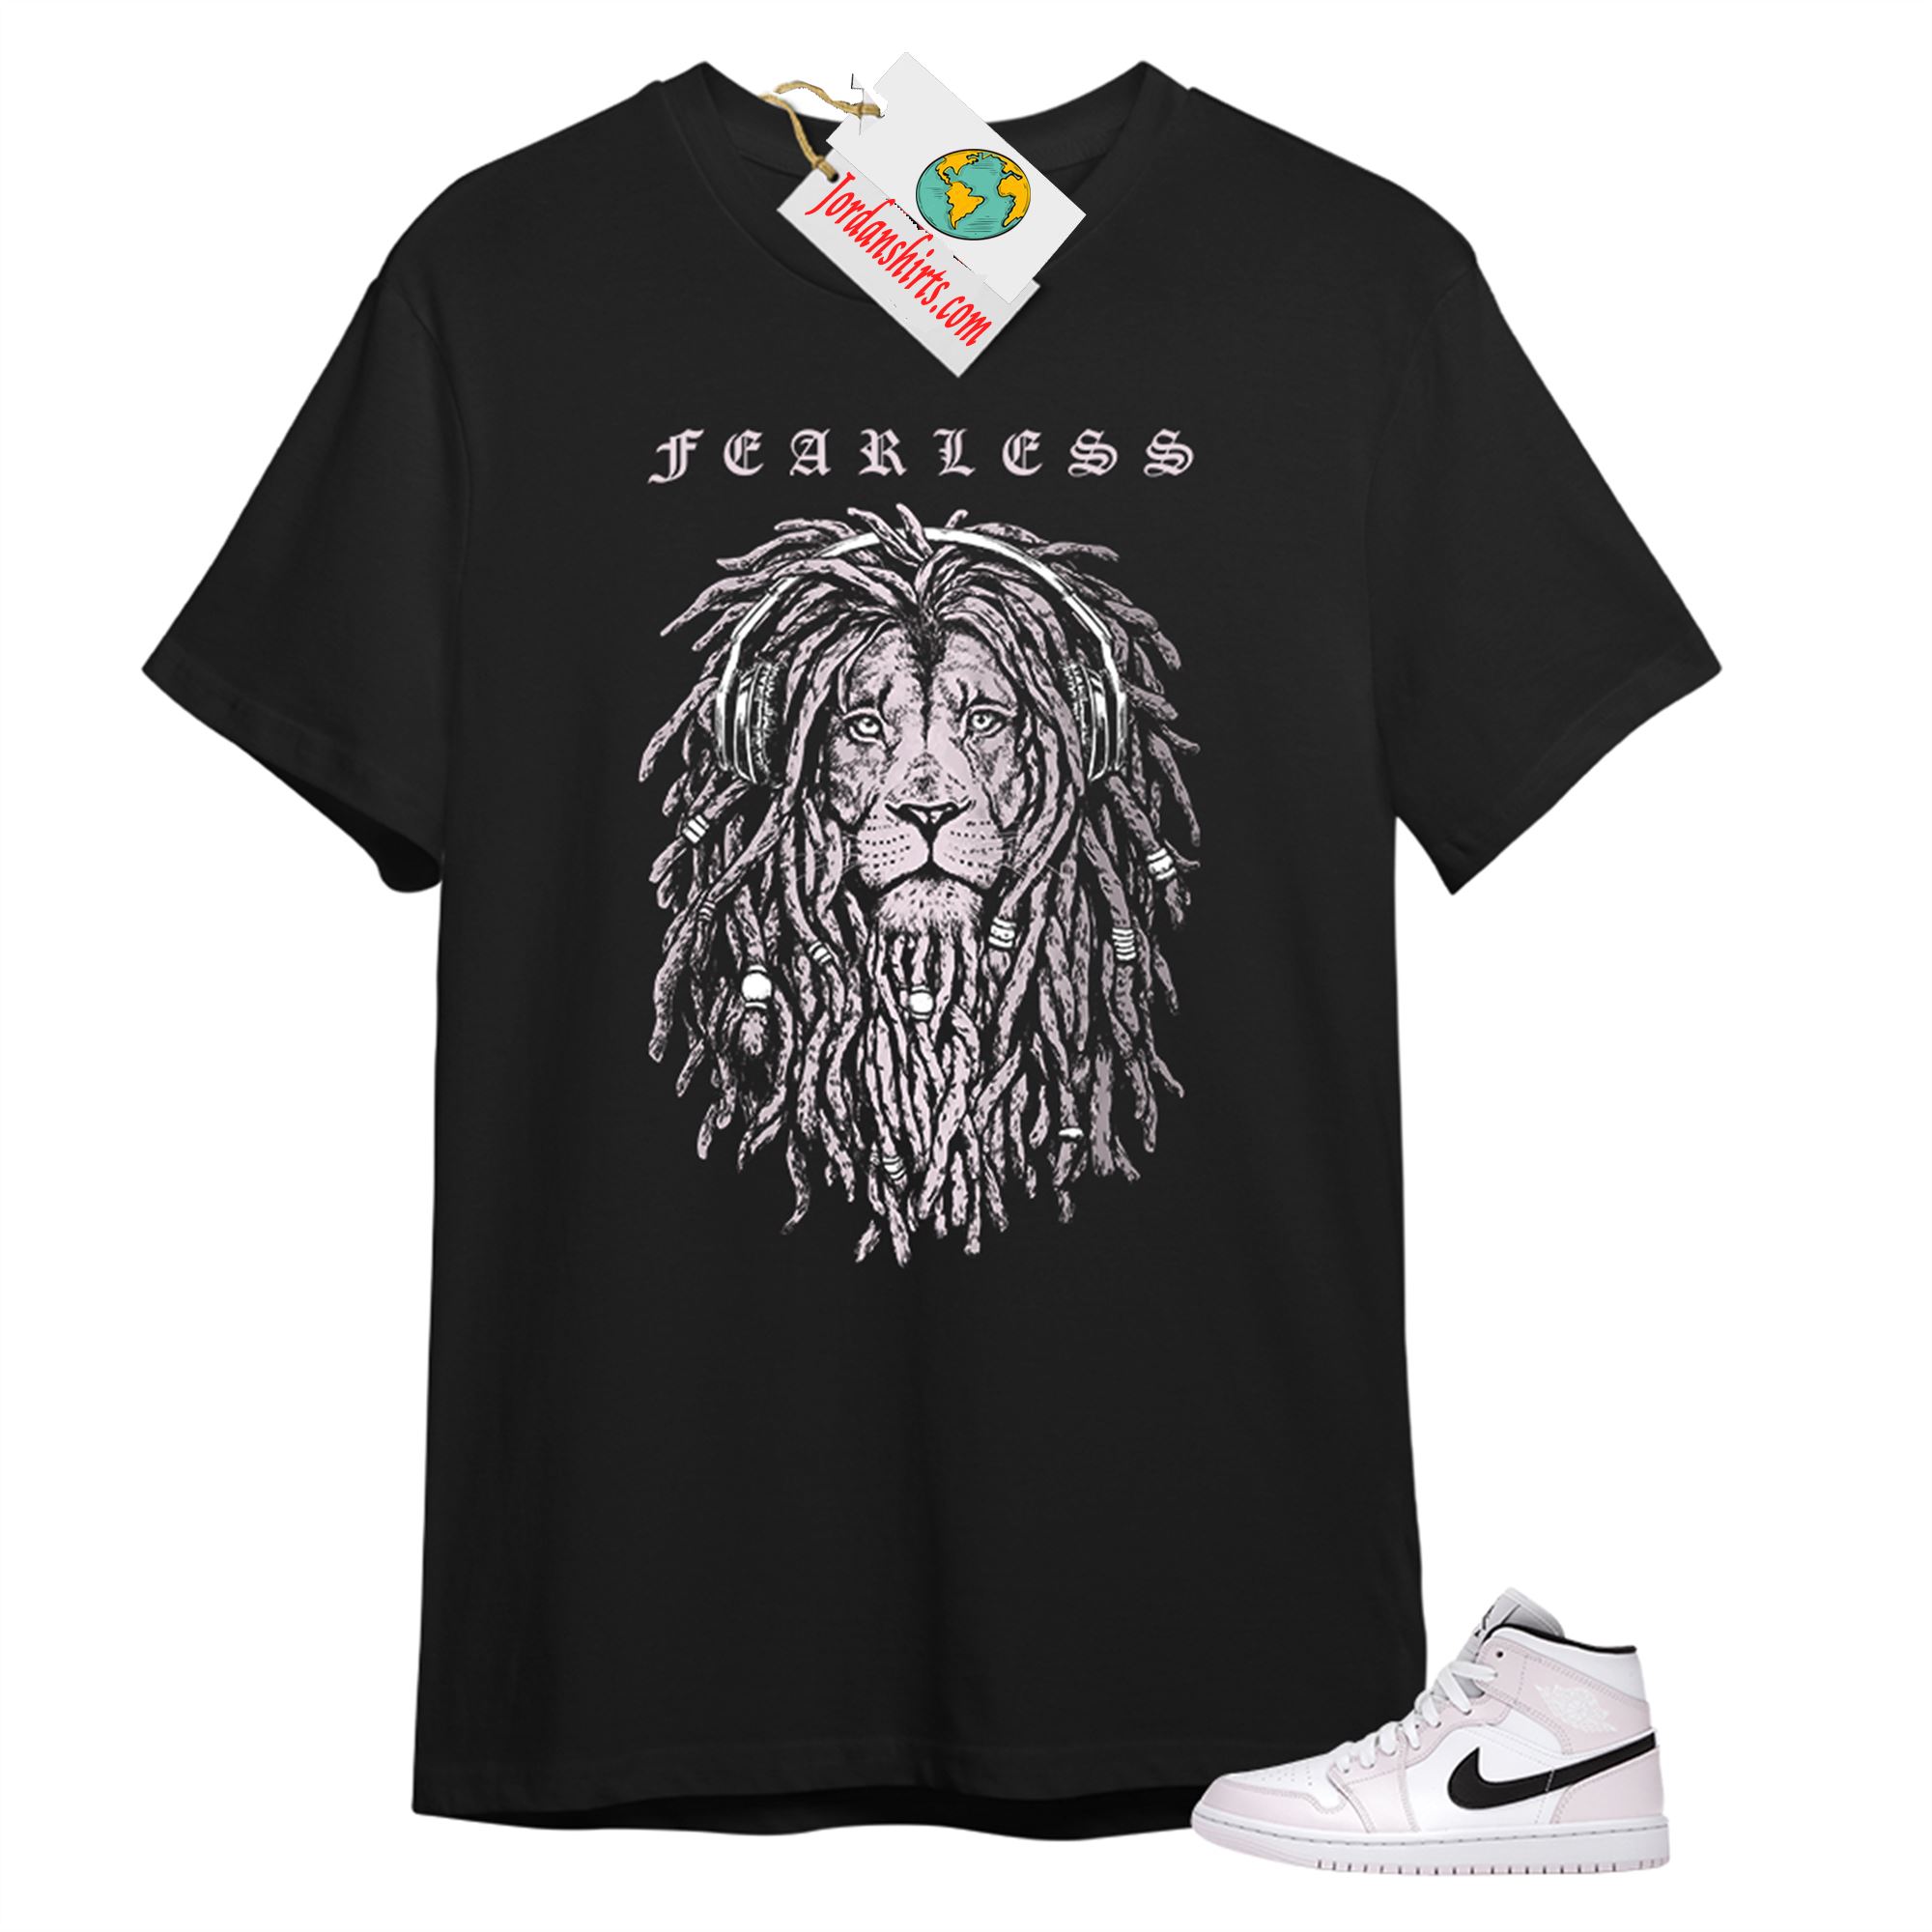 Jordan 1 Shirt, Fearless Lion Black T-shirt Air Jordan 1 Barely Rose 1s Size Up To 5xl